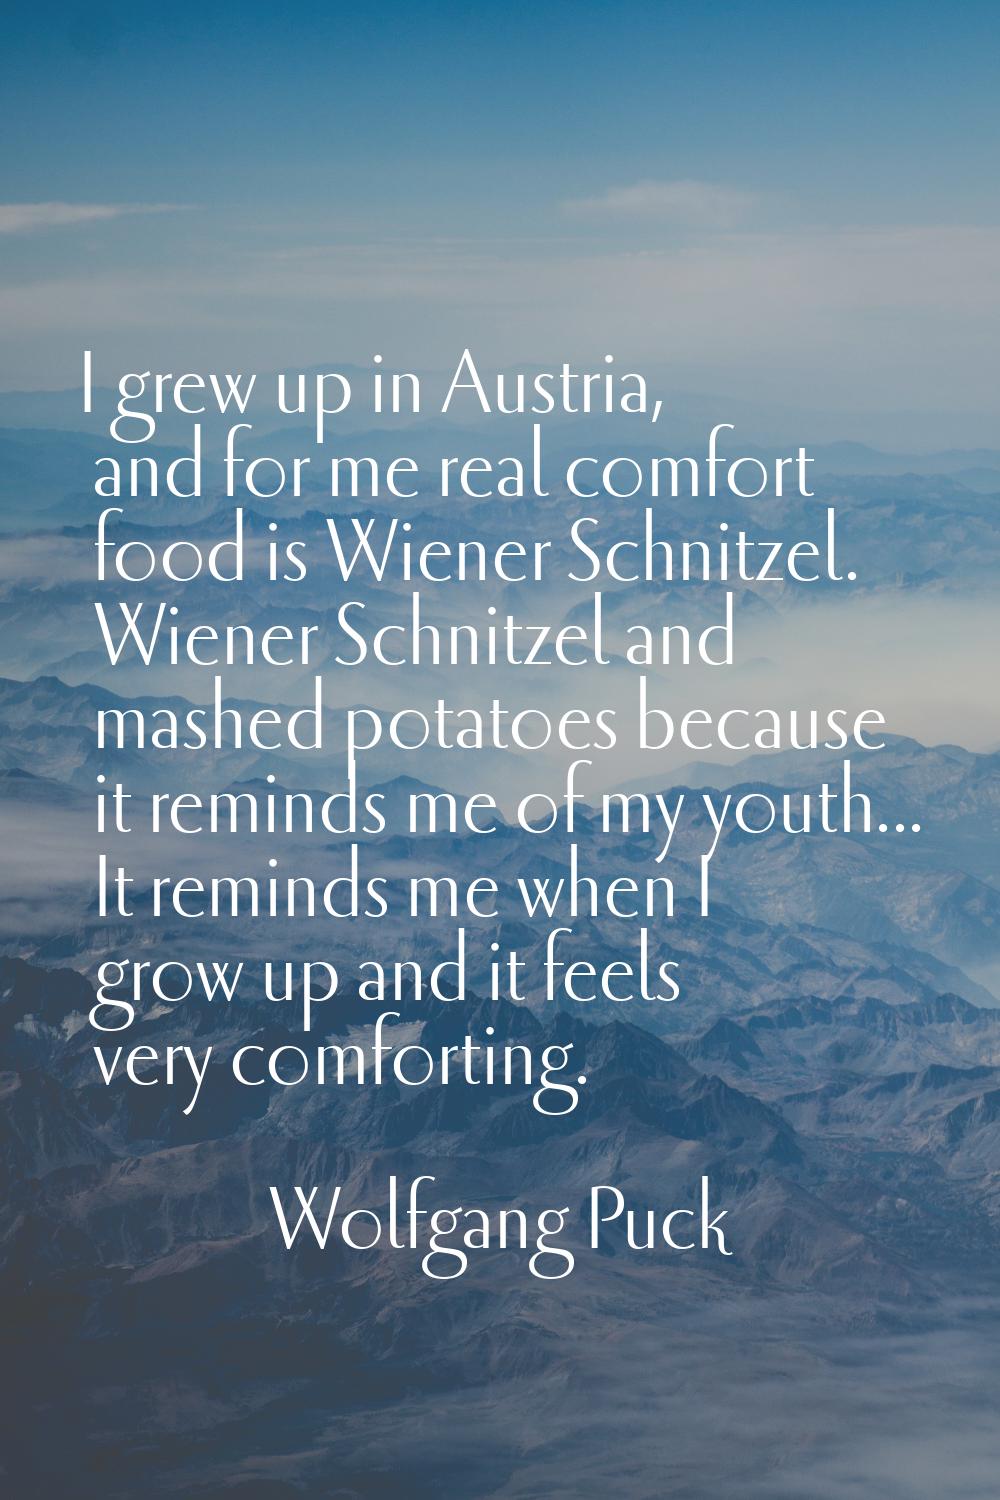 I grew up in Austria, and for me real comfort food is Wiener Schnitzel. Wiener Schnitzel and mashed